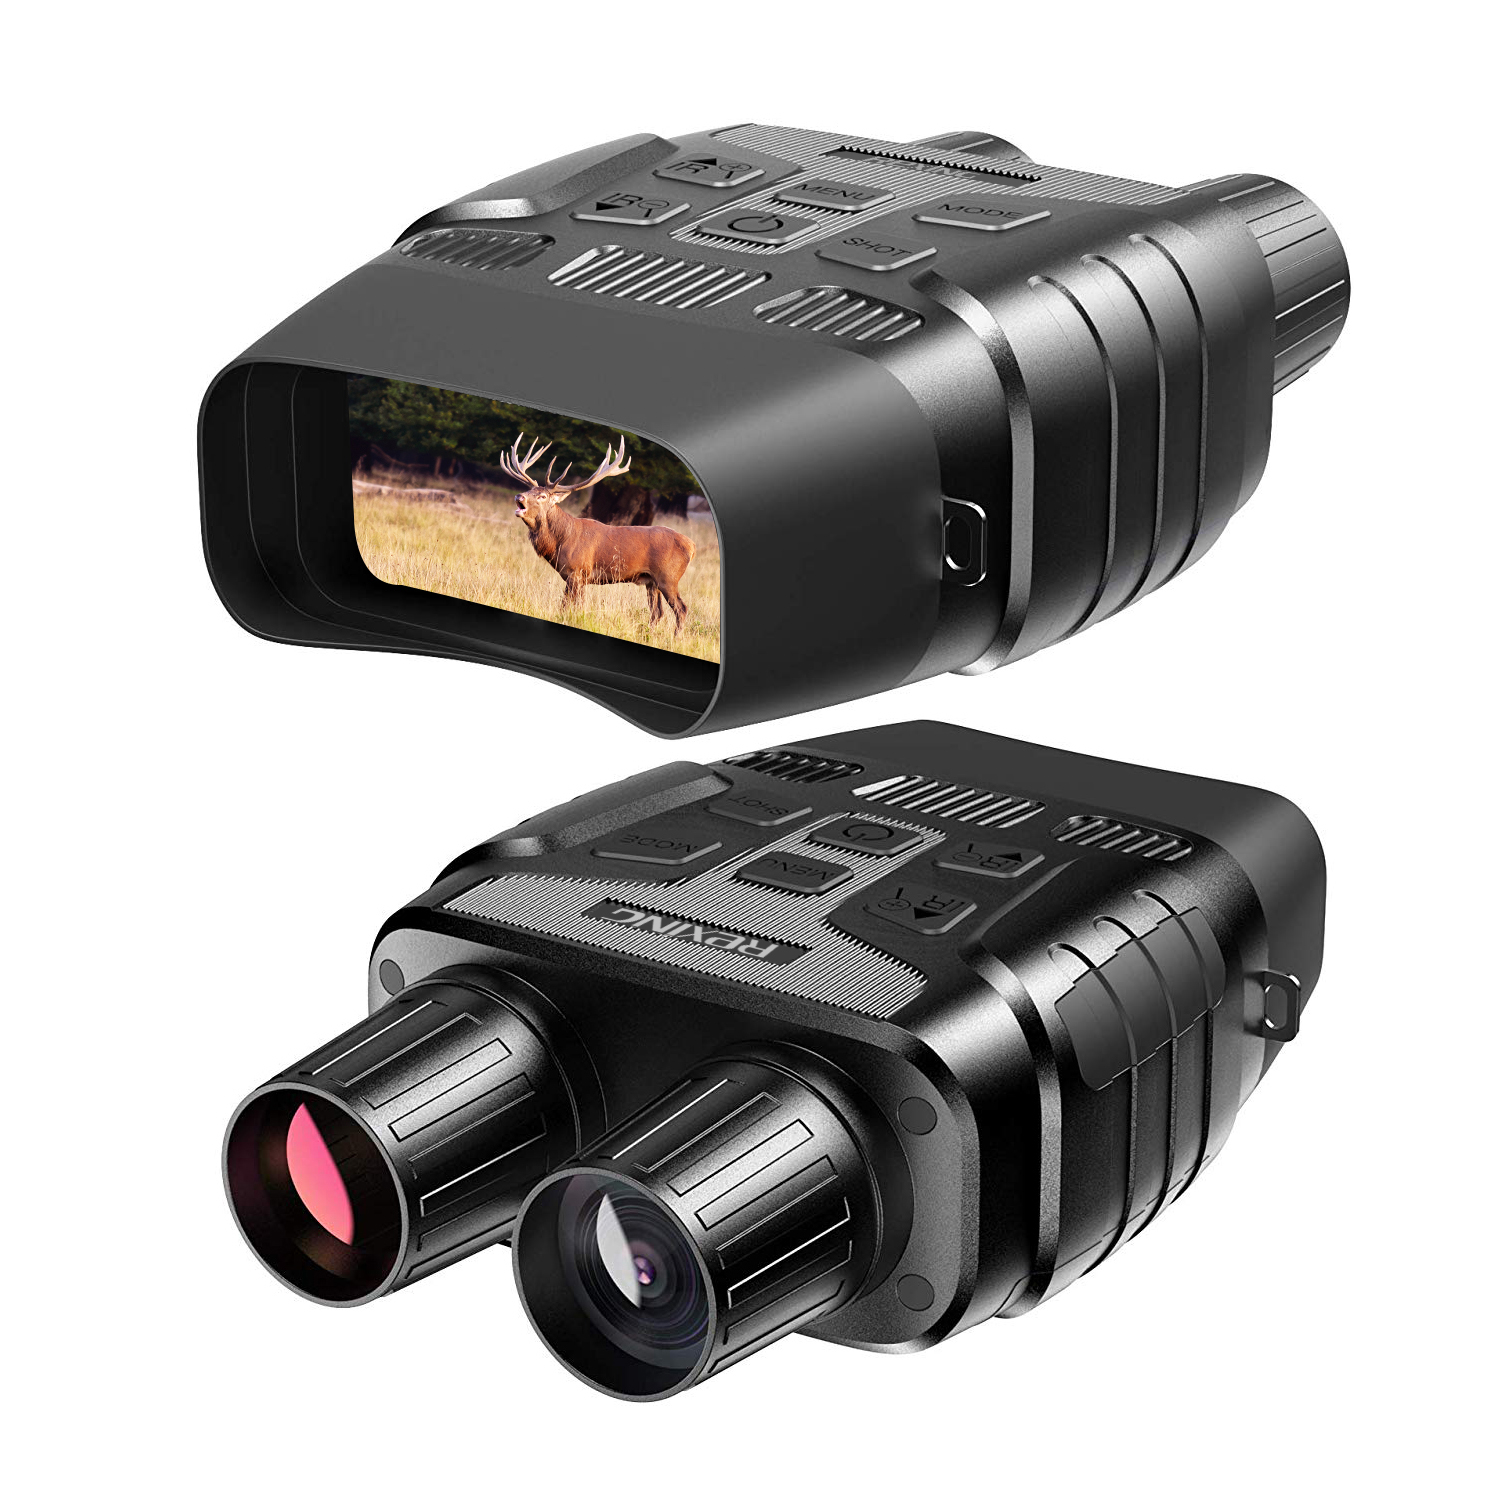 Rexing B1 (Black) Night Vision Goggles Camera Binoculars